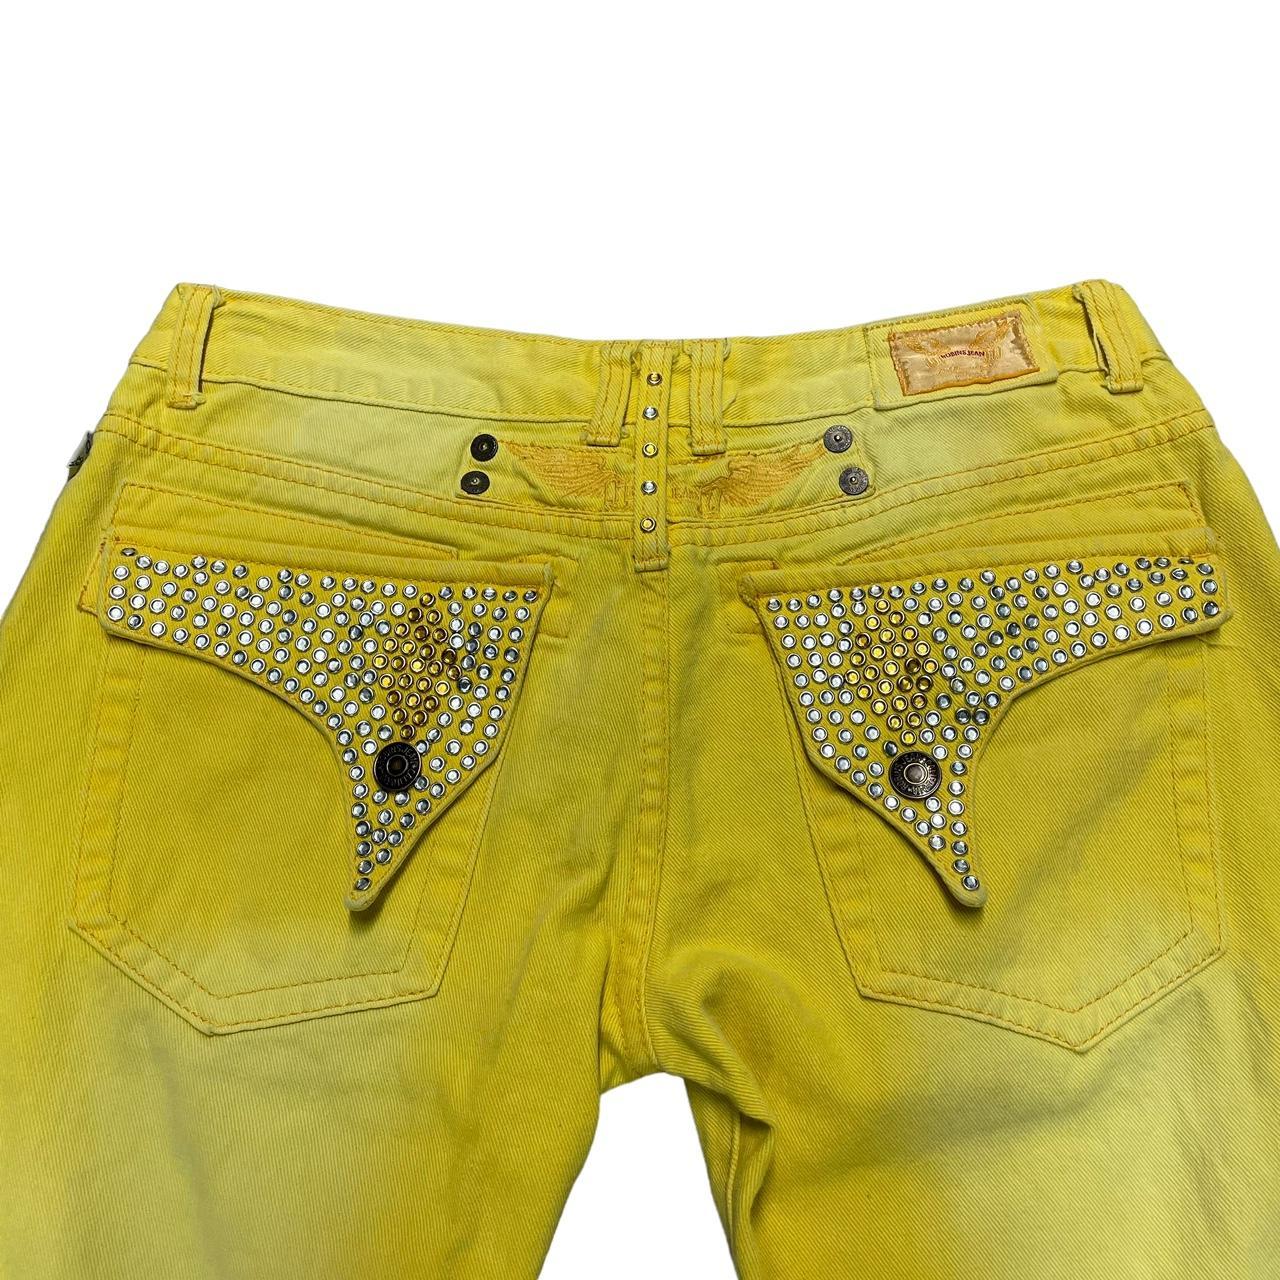 Robins Jeans Shorts Mens 35x13.5 Rhinstone Studded... - Depop